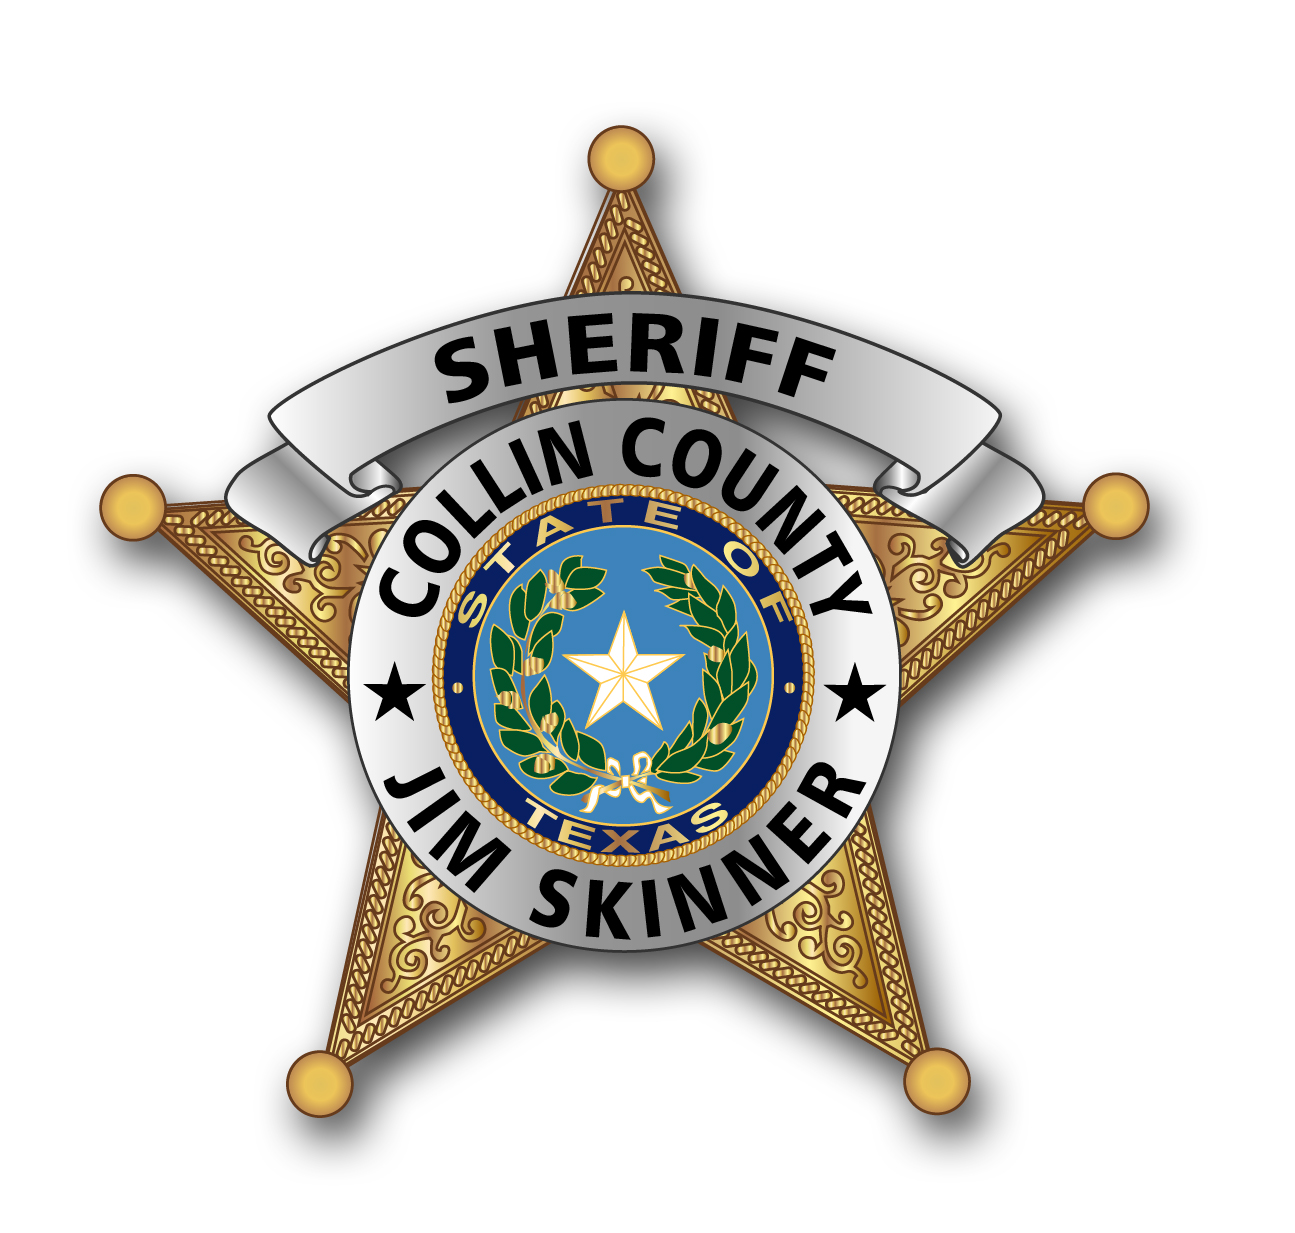 Collin County TX Sheriff